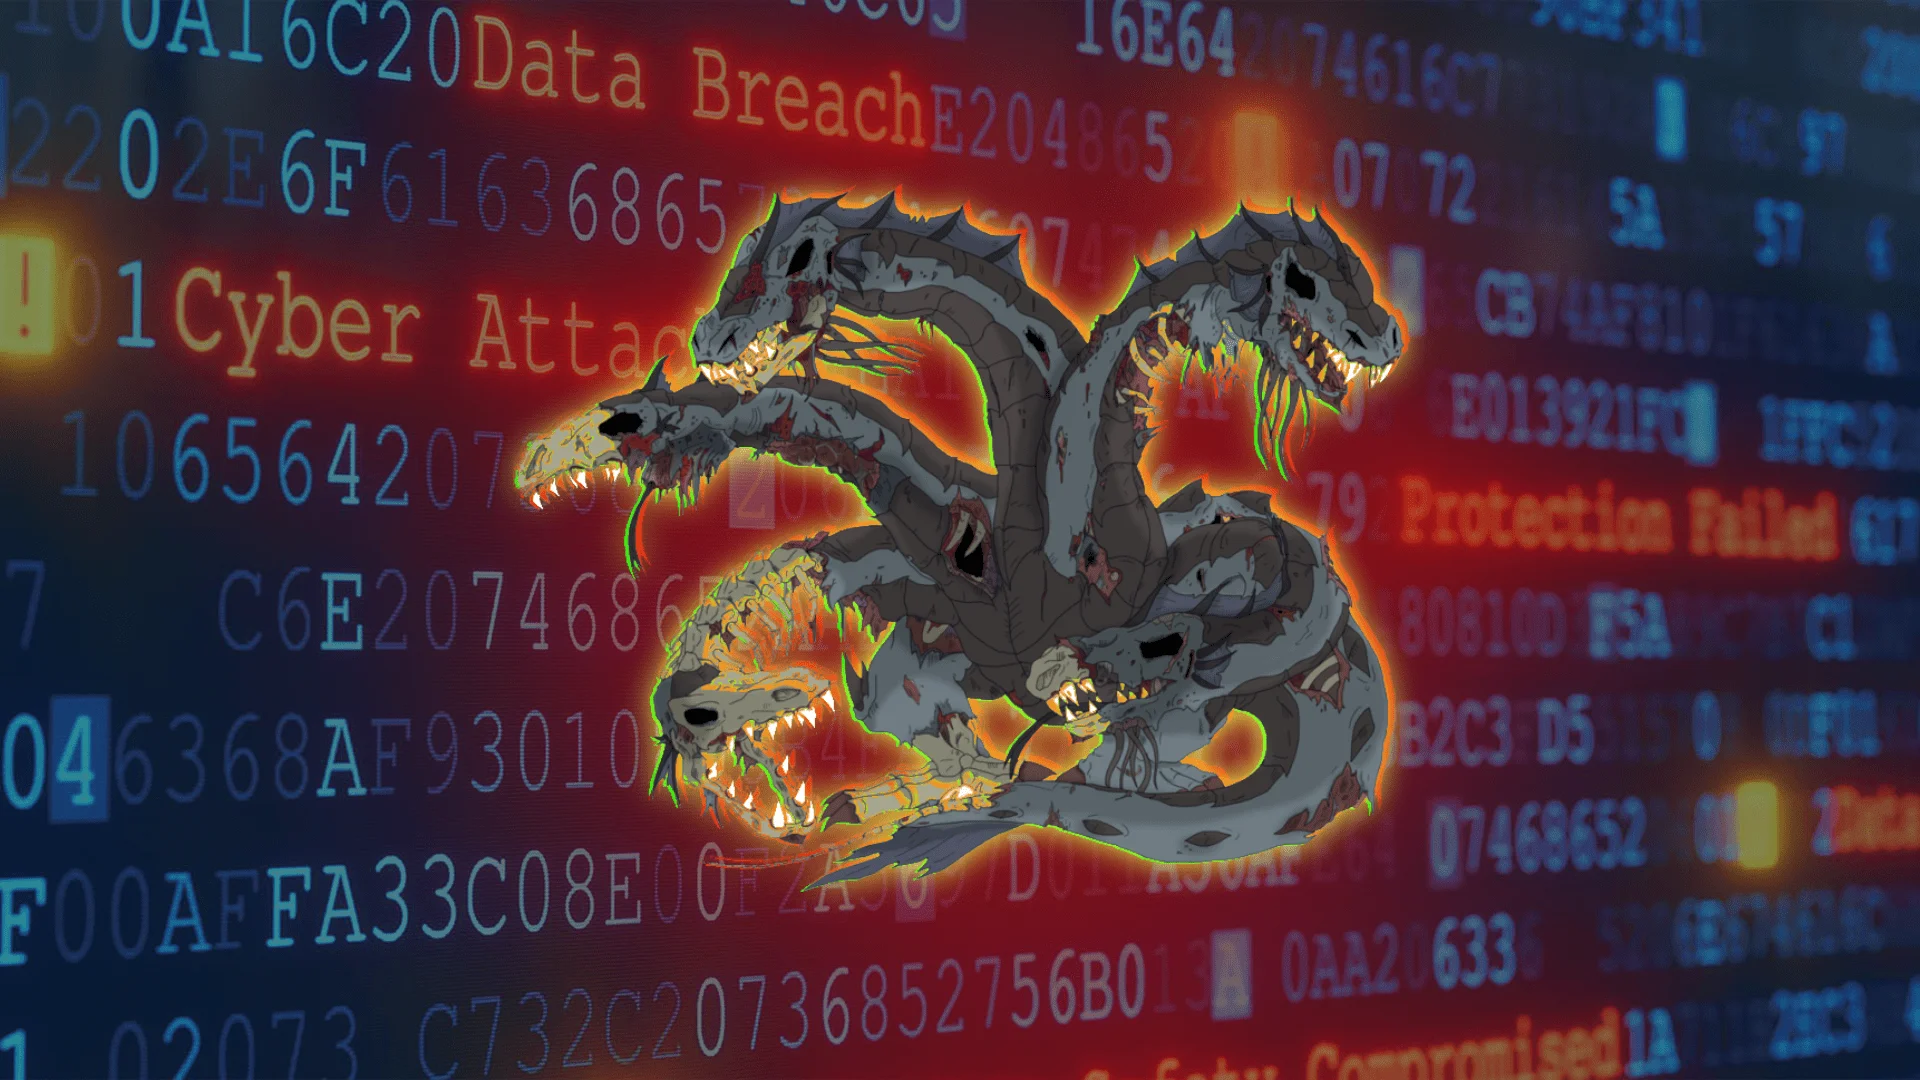 Hydra Malware - Source: hispasec